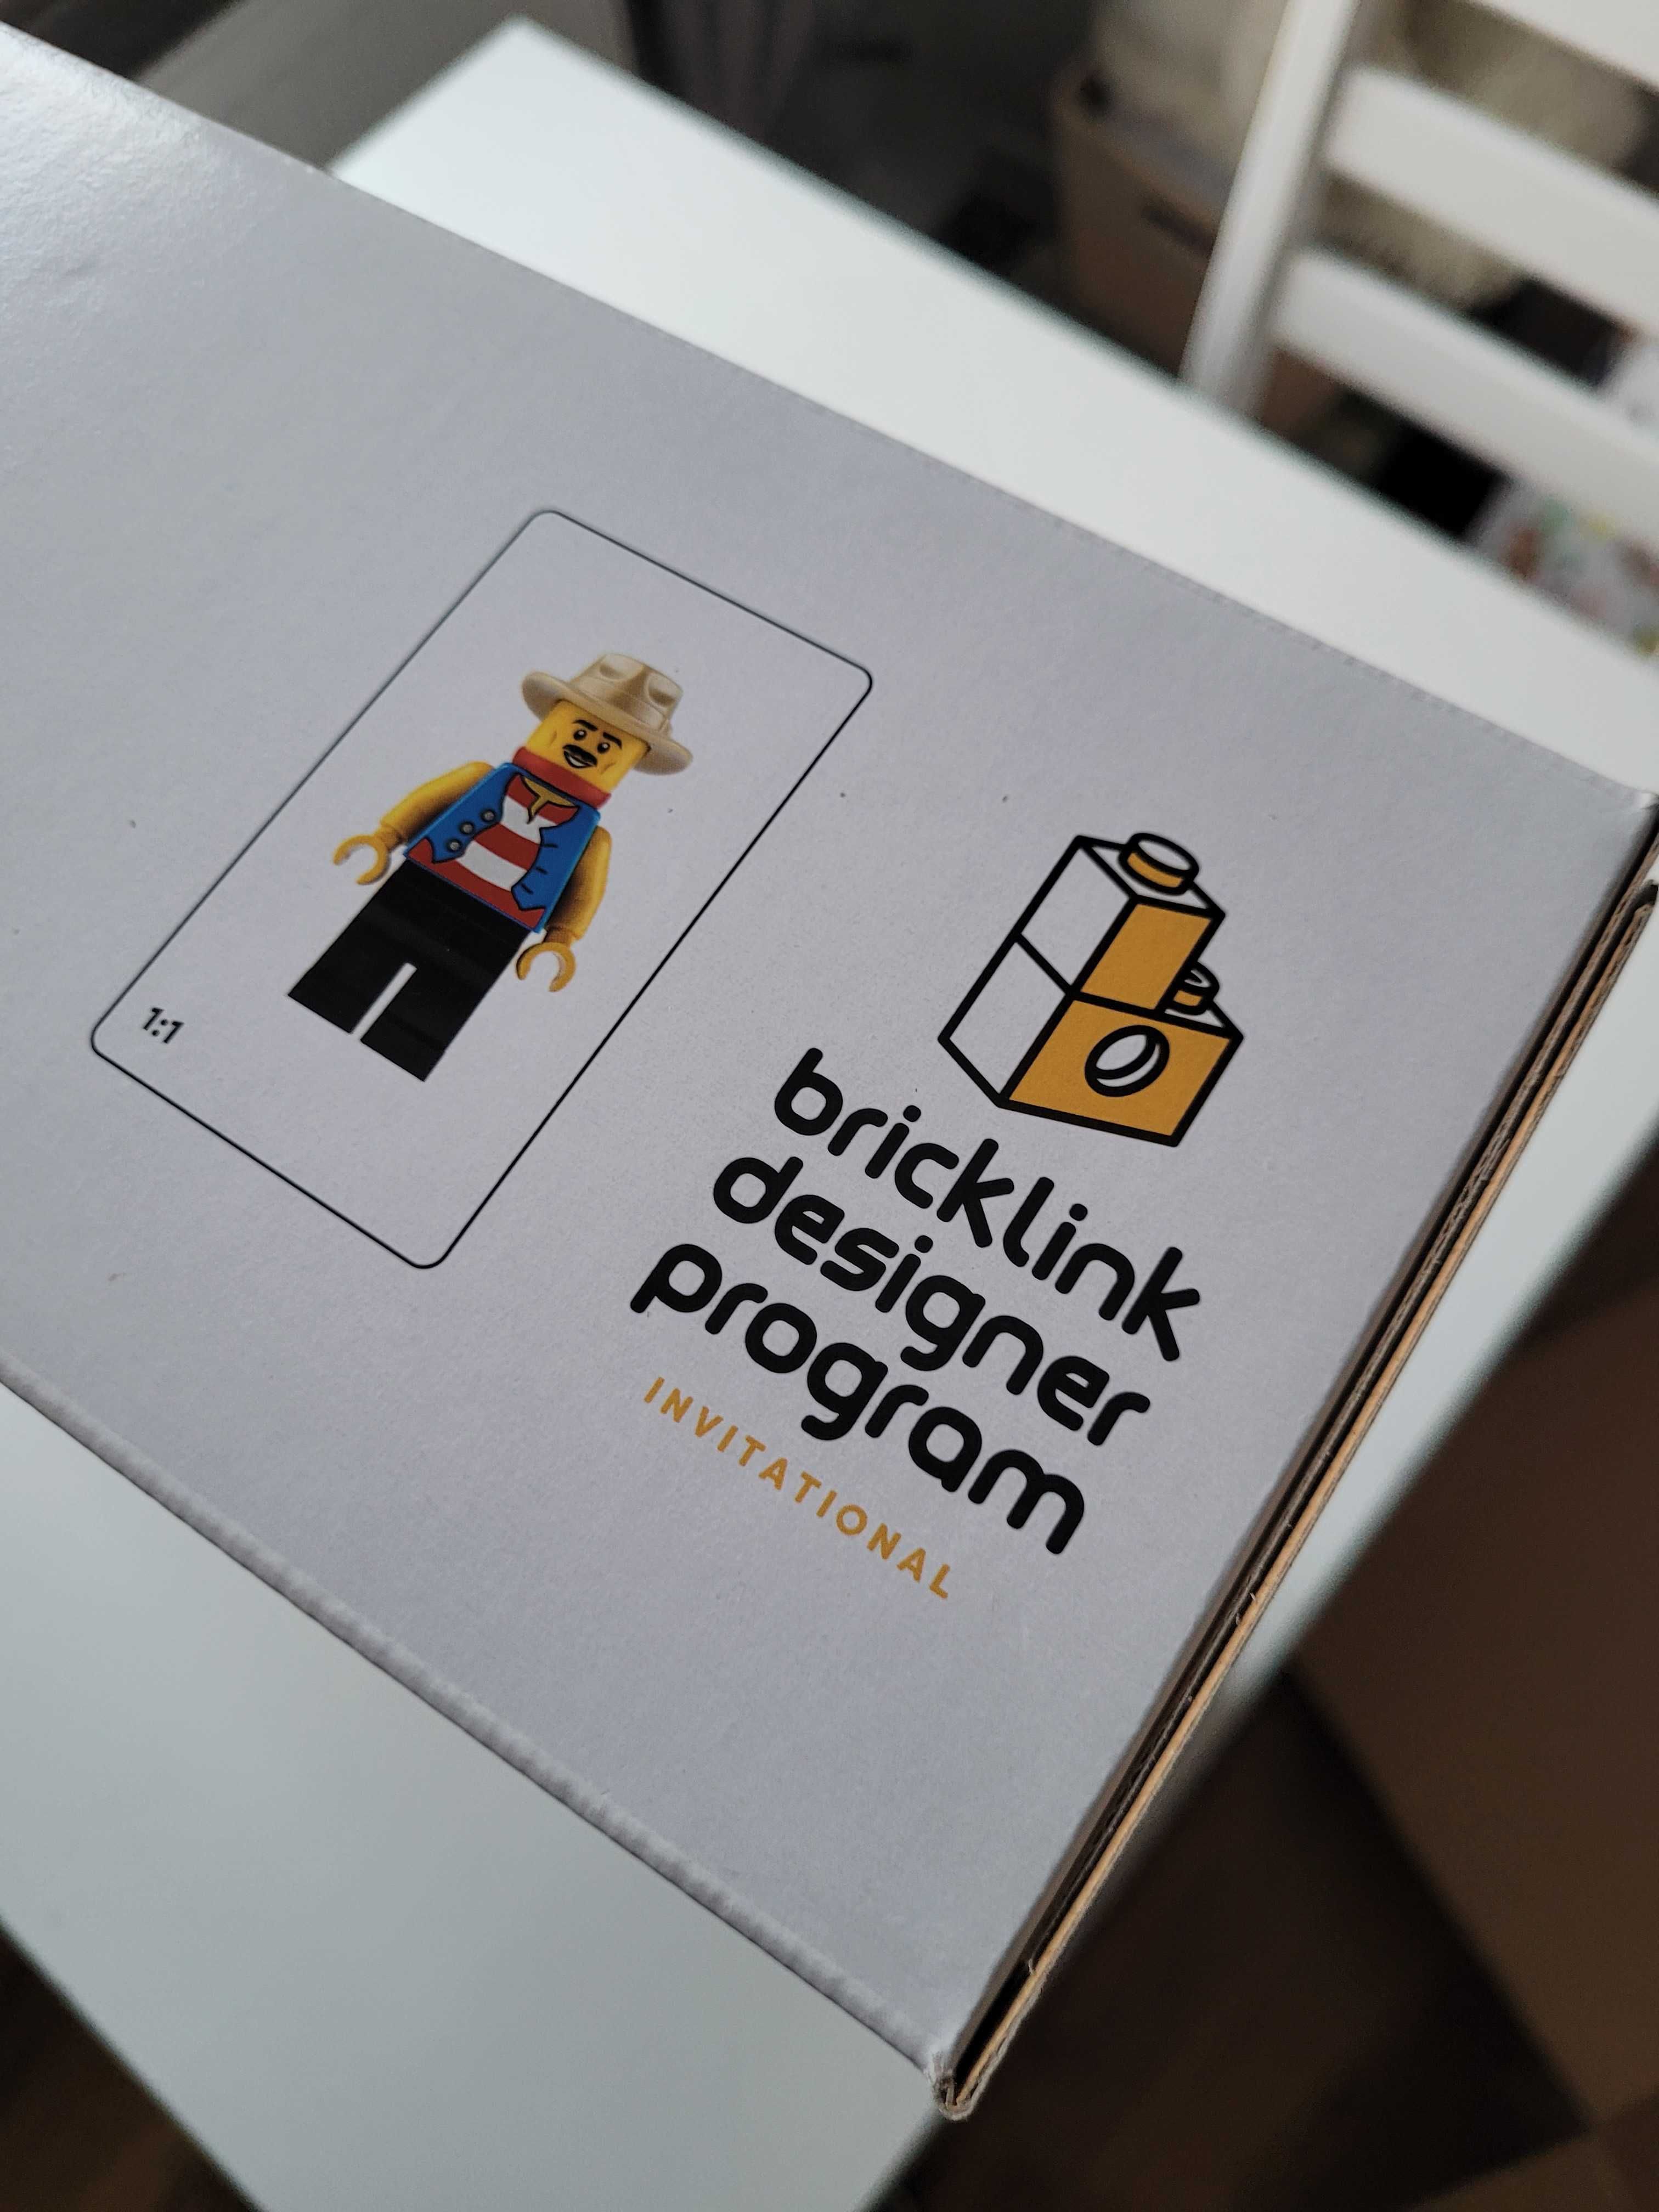 Lego 910023 BrickLink Designer Program Weneckie Domy nowe